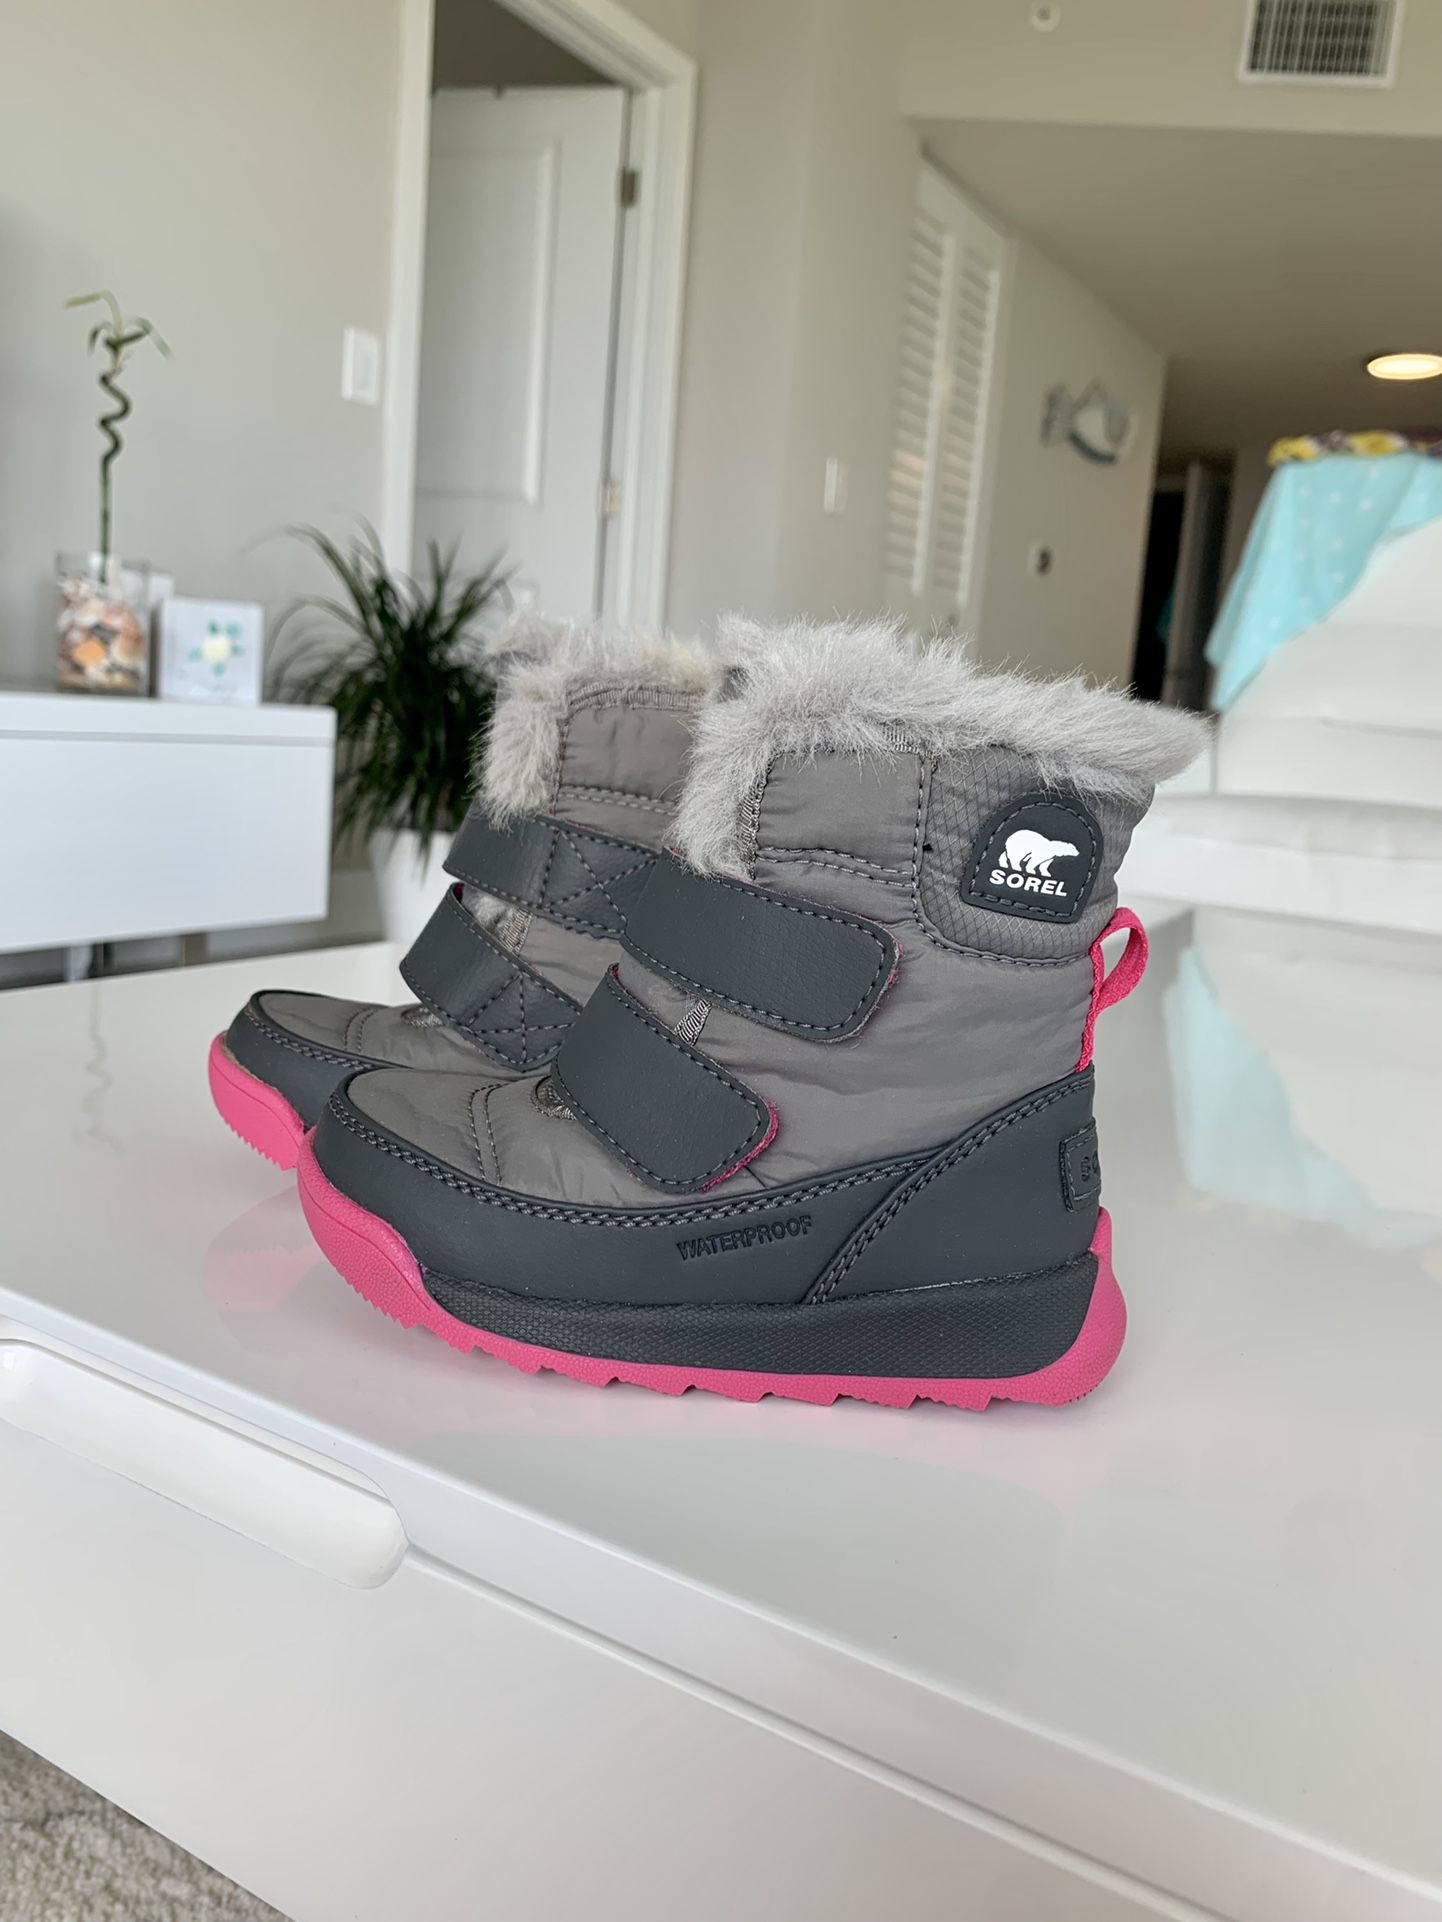 Sorel Baby Girl’s Waterproof Snow boots , Size 7 